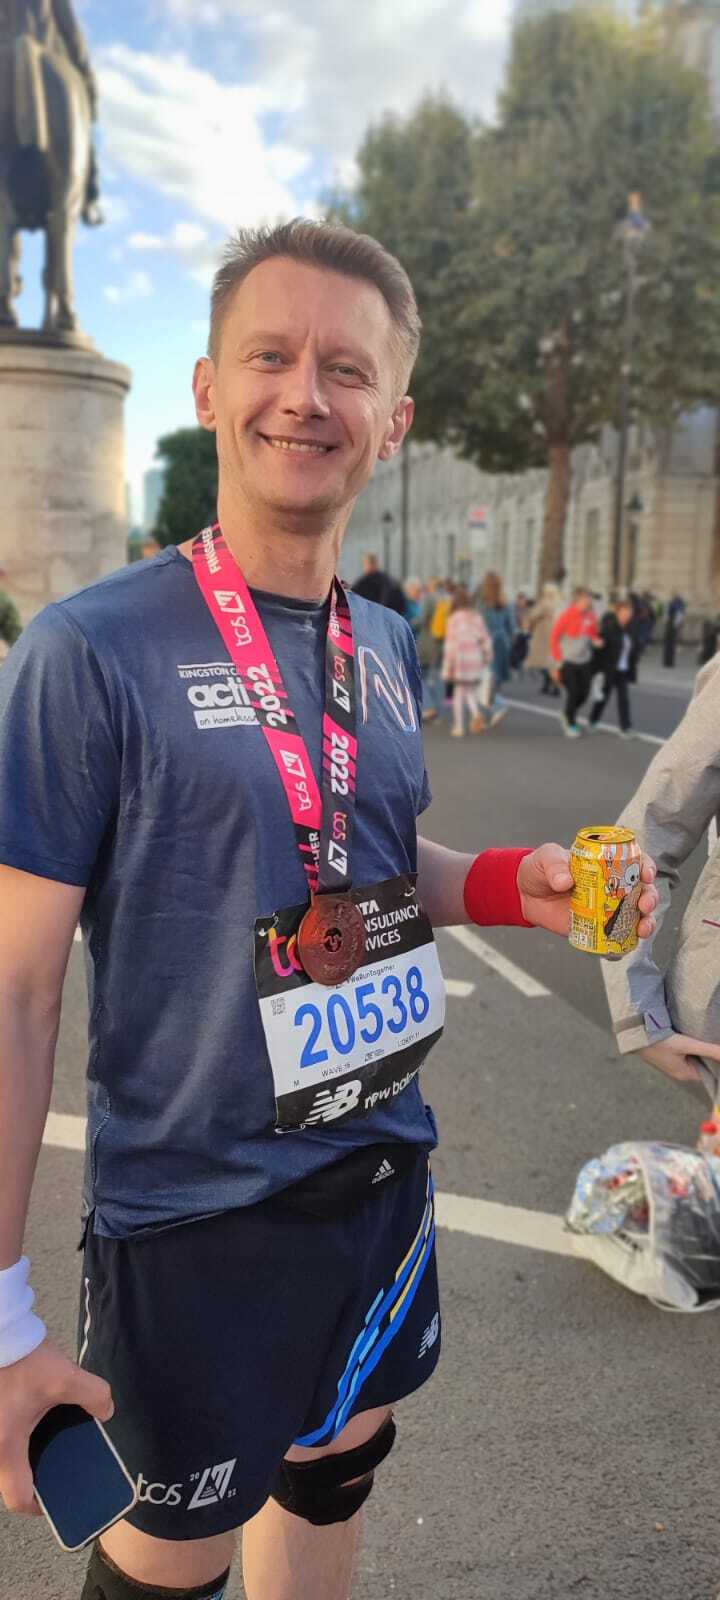 Irek completed marathon